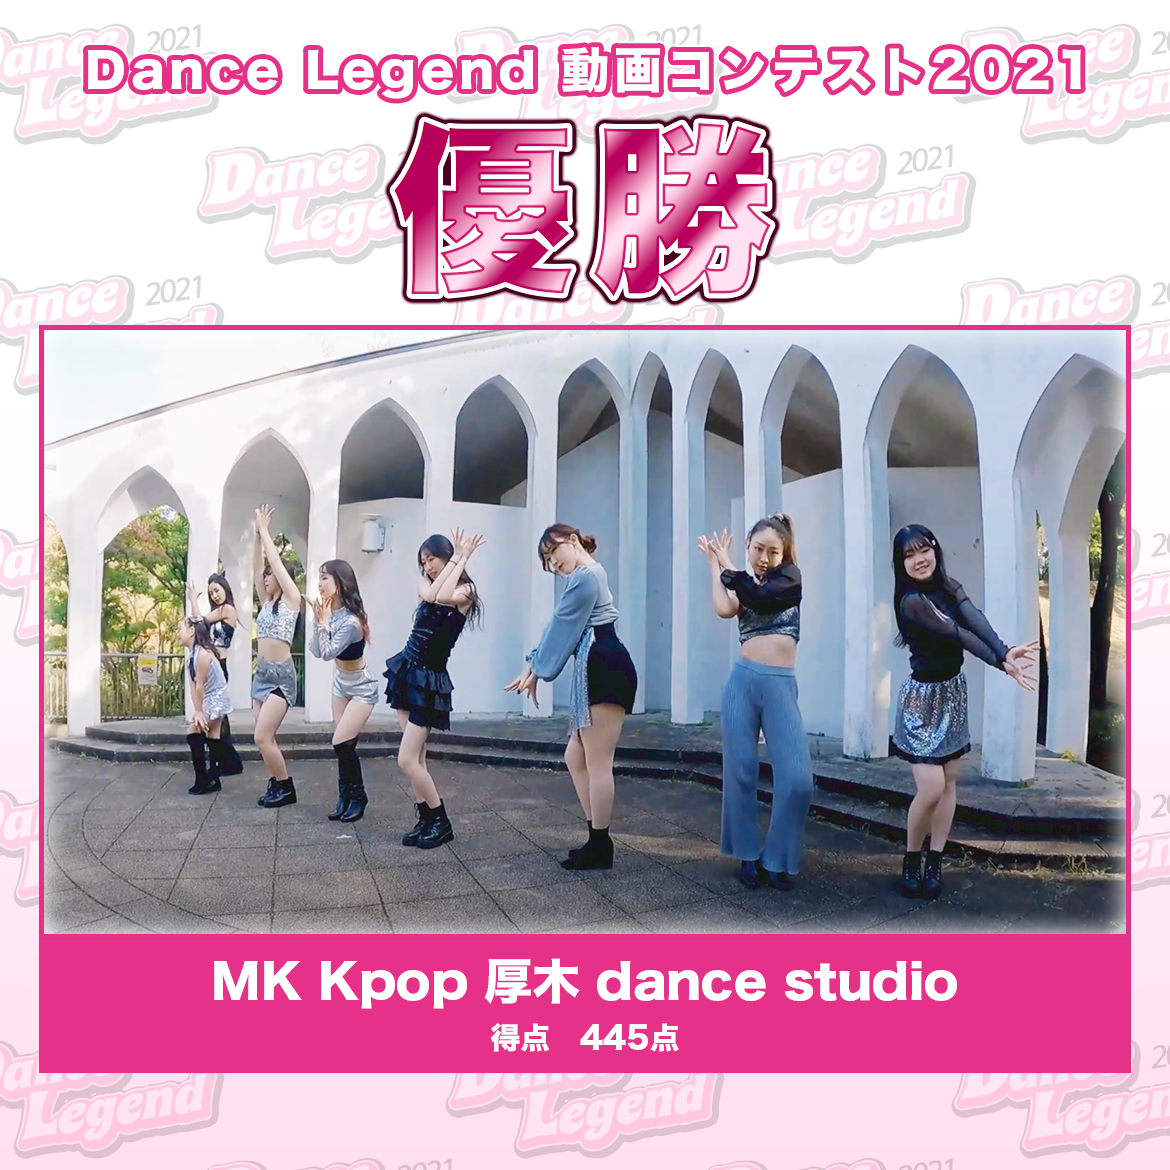 MK Kpop 厚木 dance studio